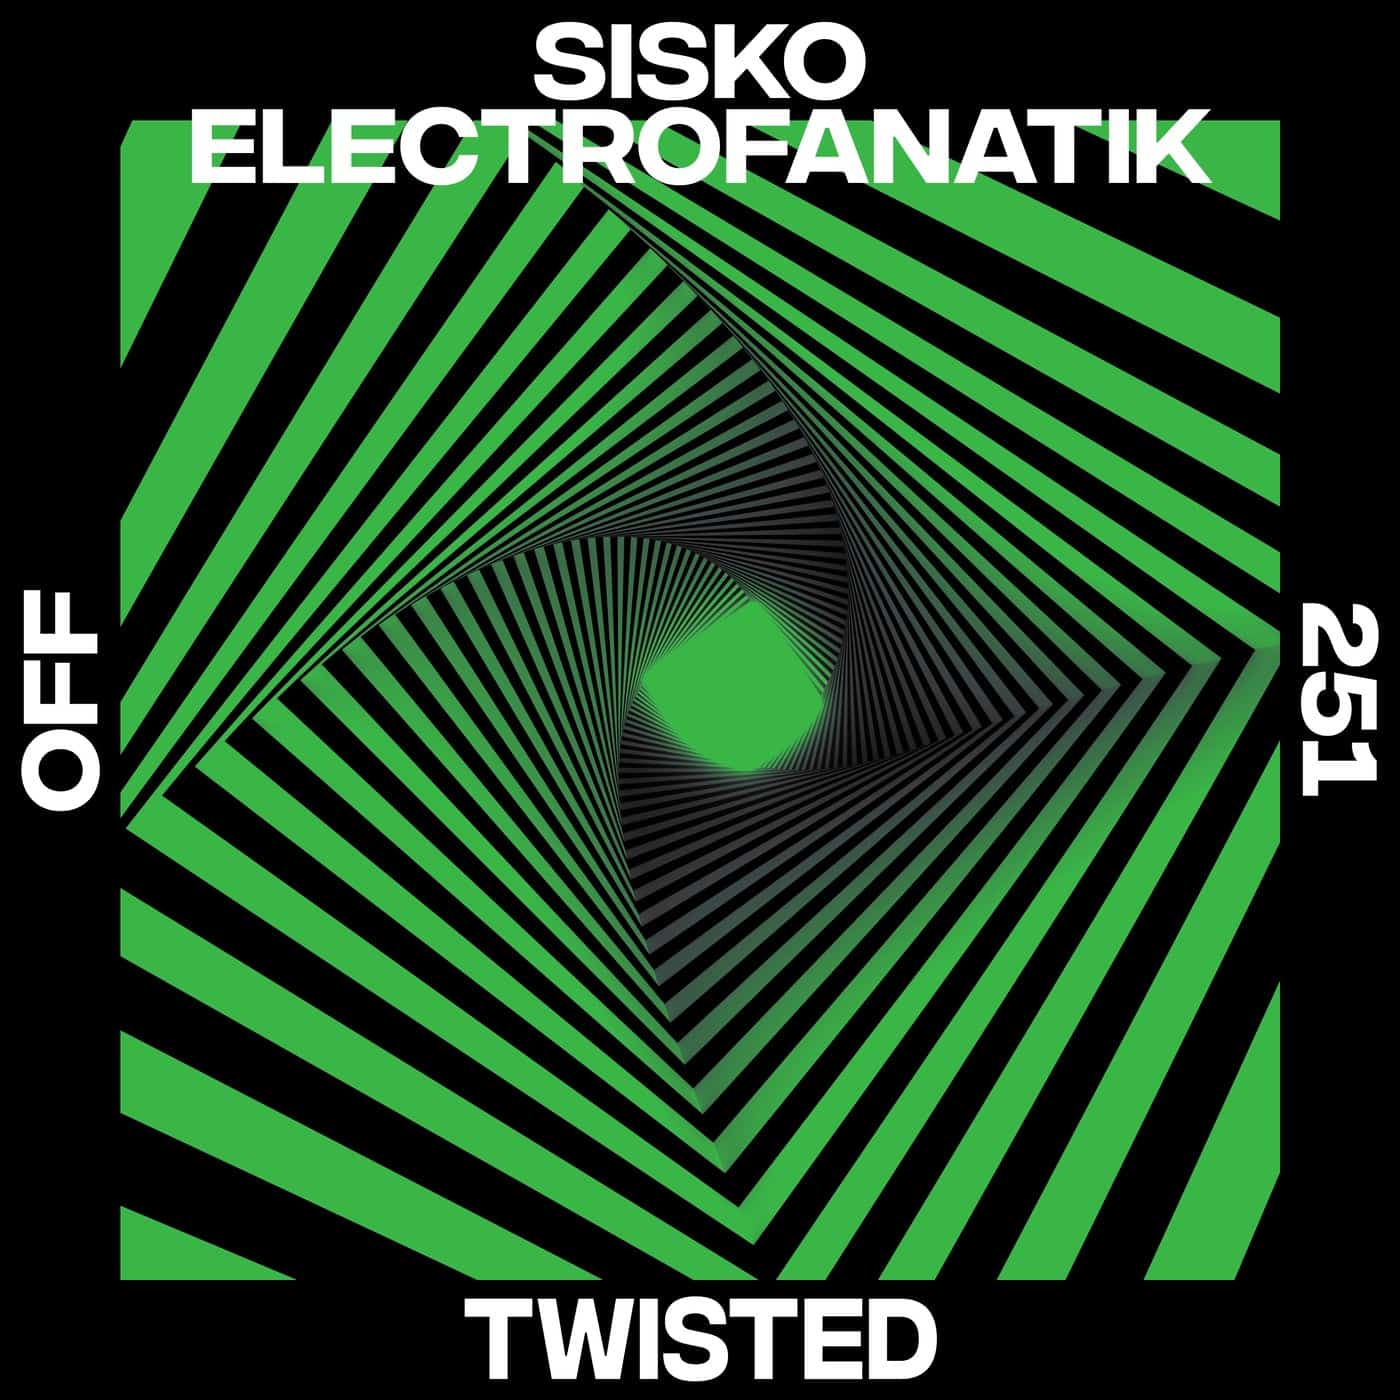 image cover: Sisko Electrofanatik - Twisted / OFF251